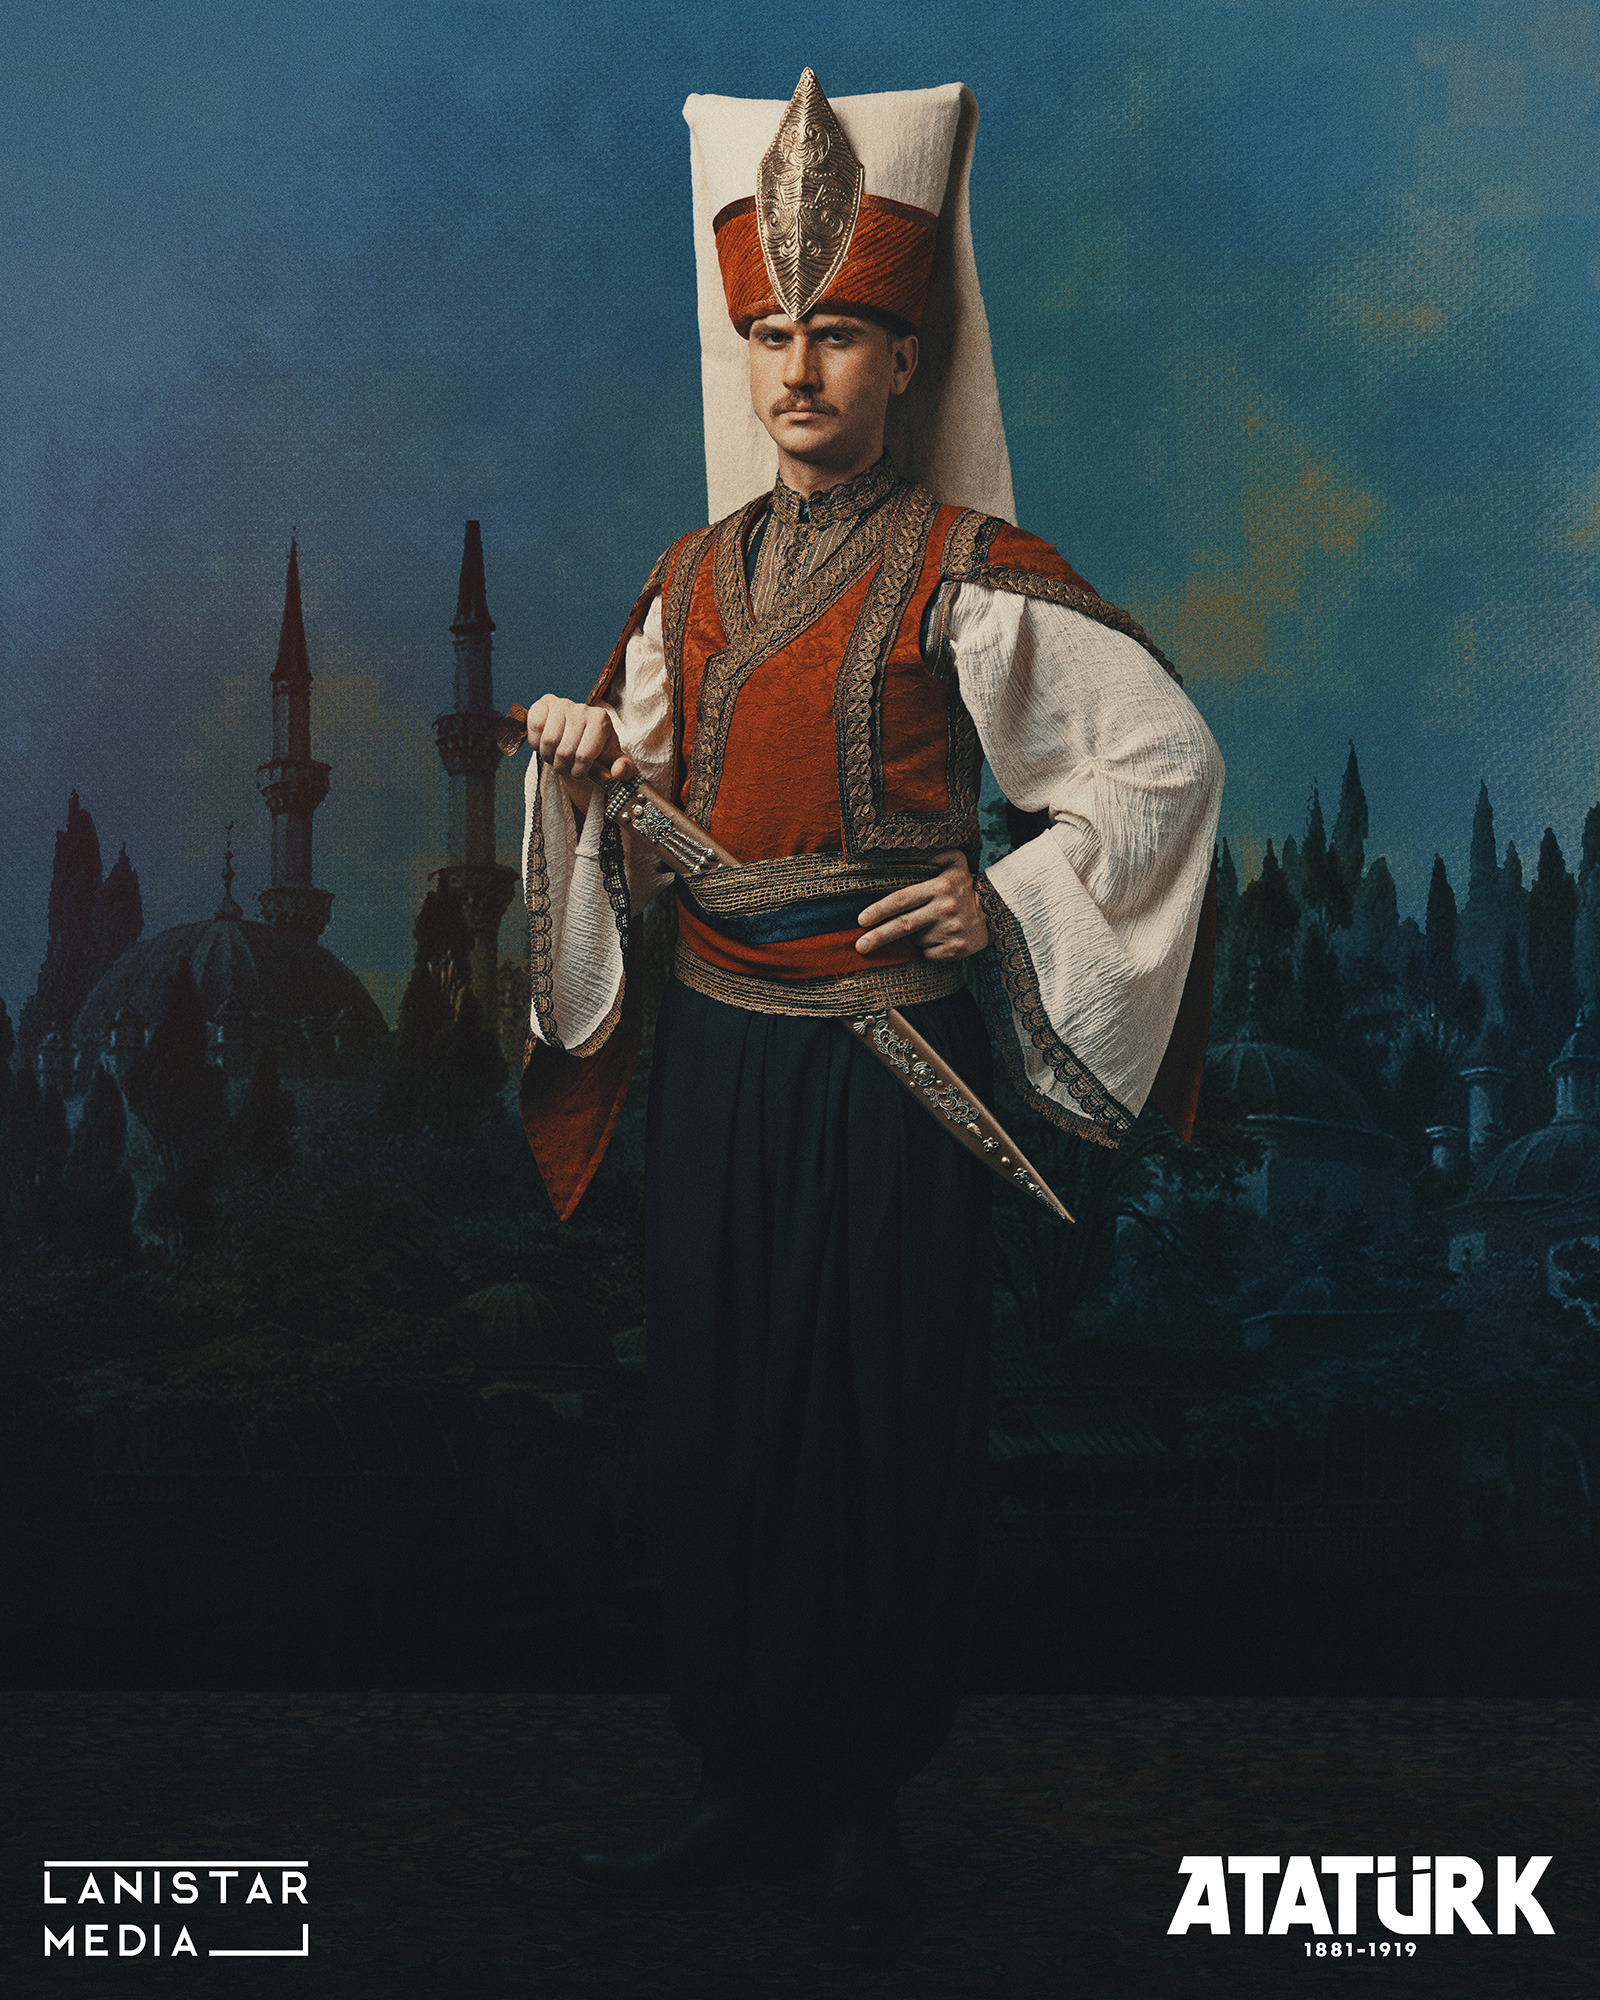 Mega Sized TV Poster Image for Atatürk 1881 - 1919 (#10 of 11)